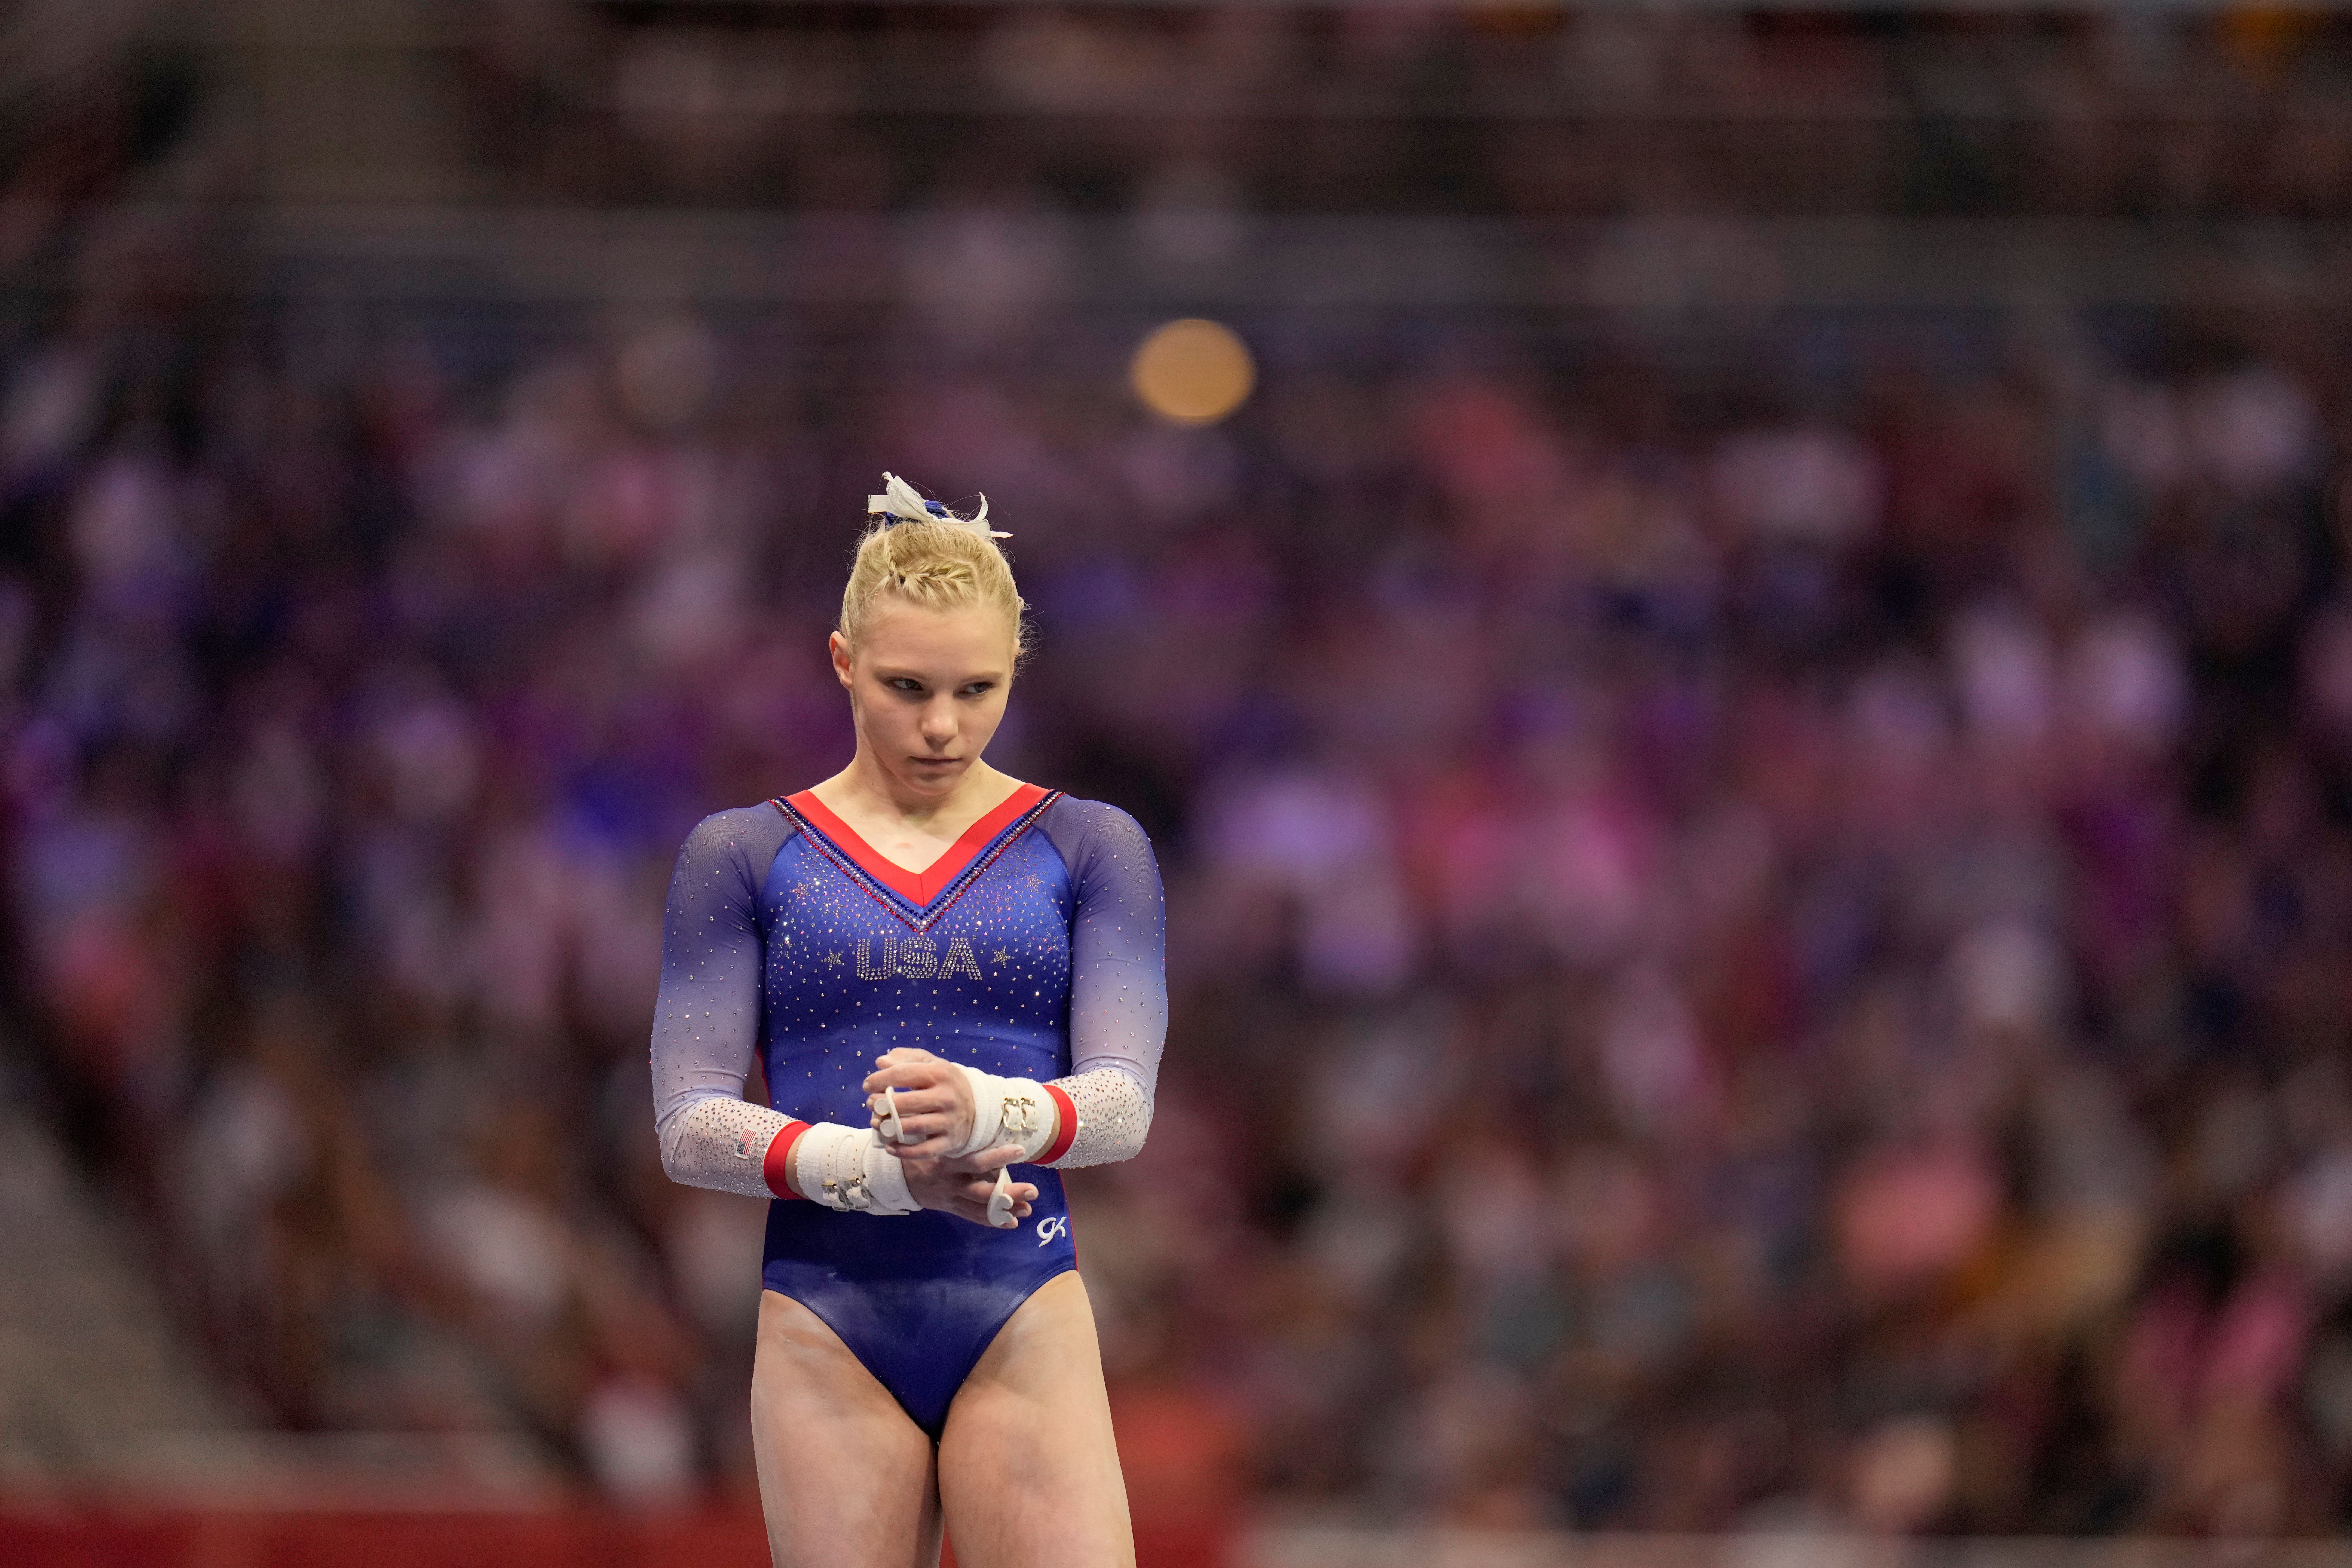 Jade Carey in Leotards: Best Photos in Gymnastics Uniforms | Life & Style